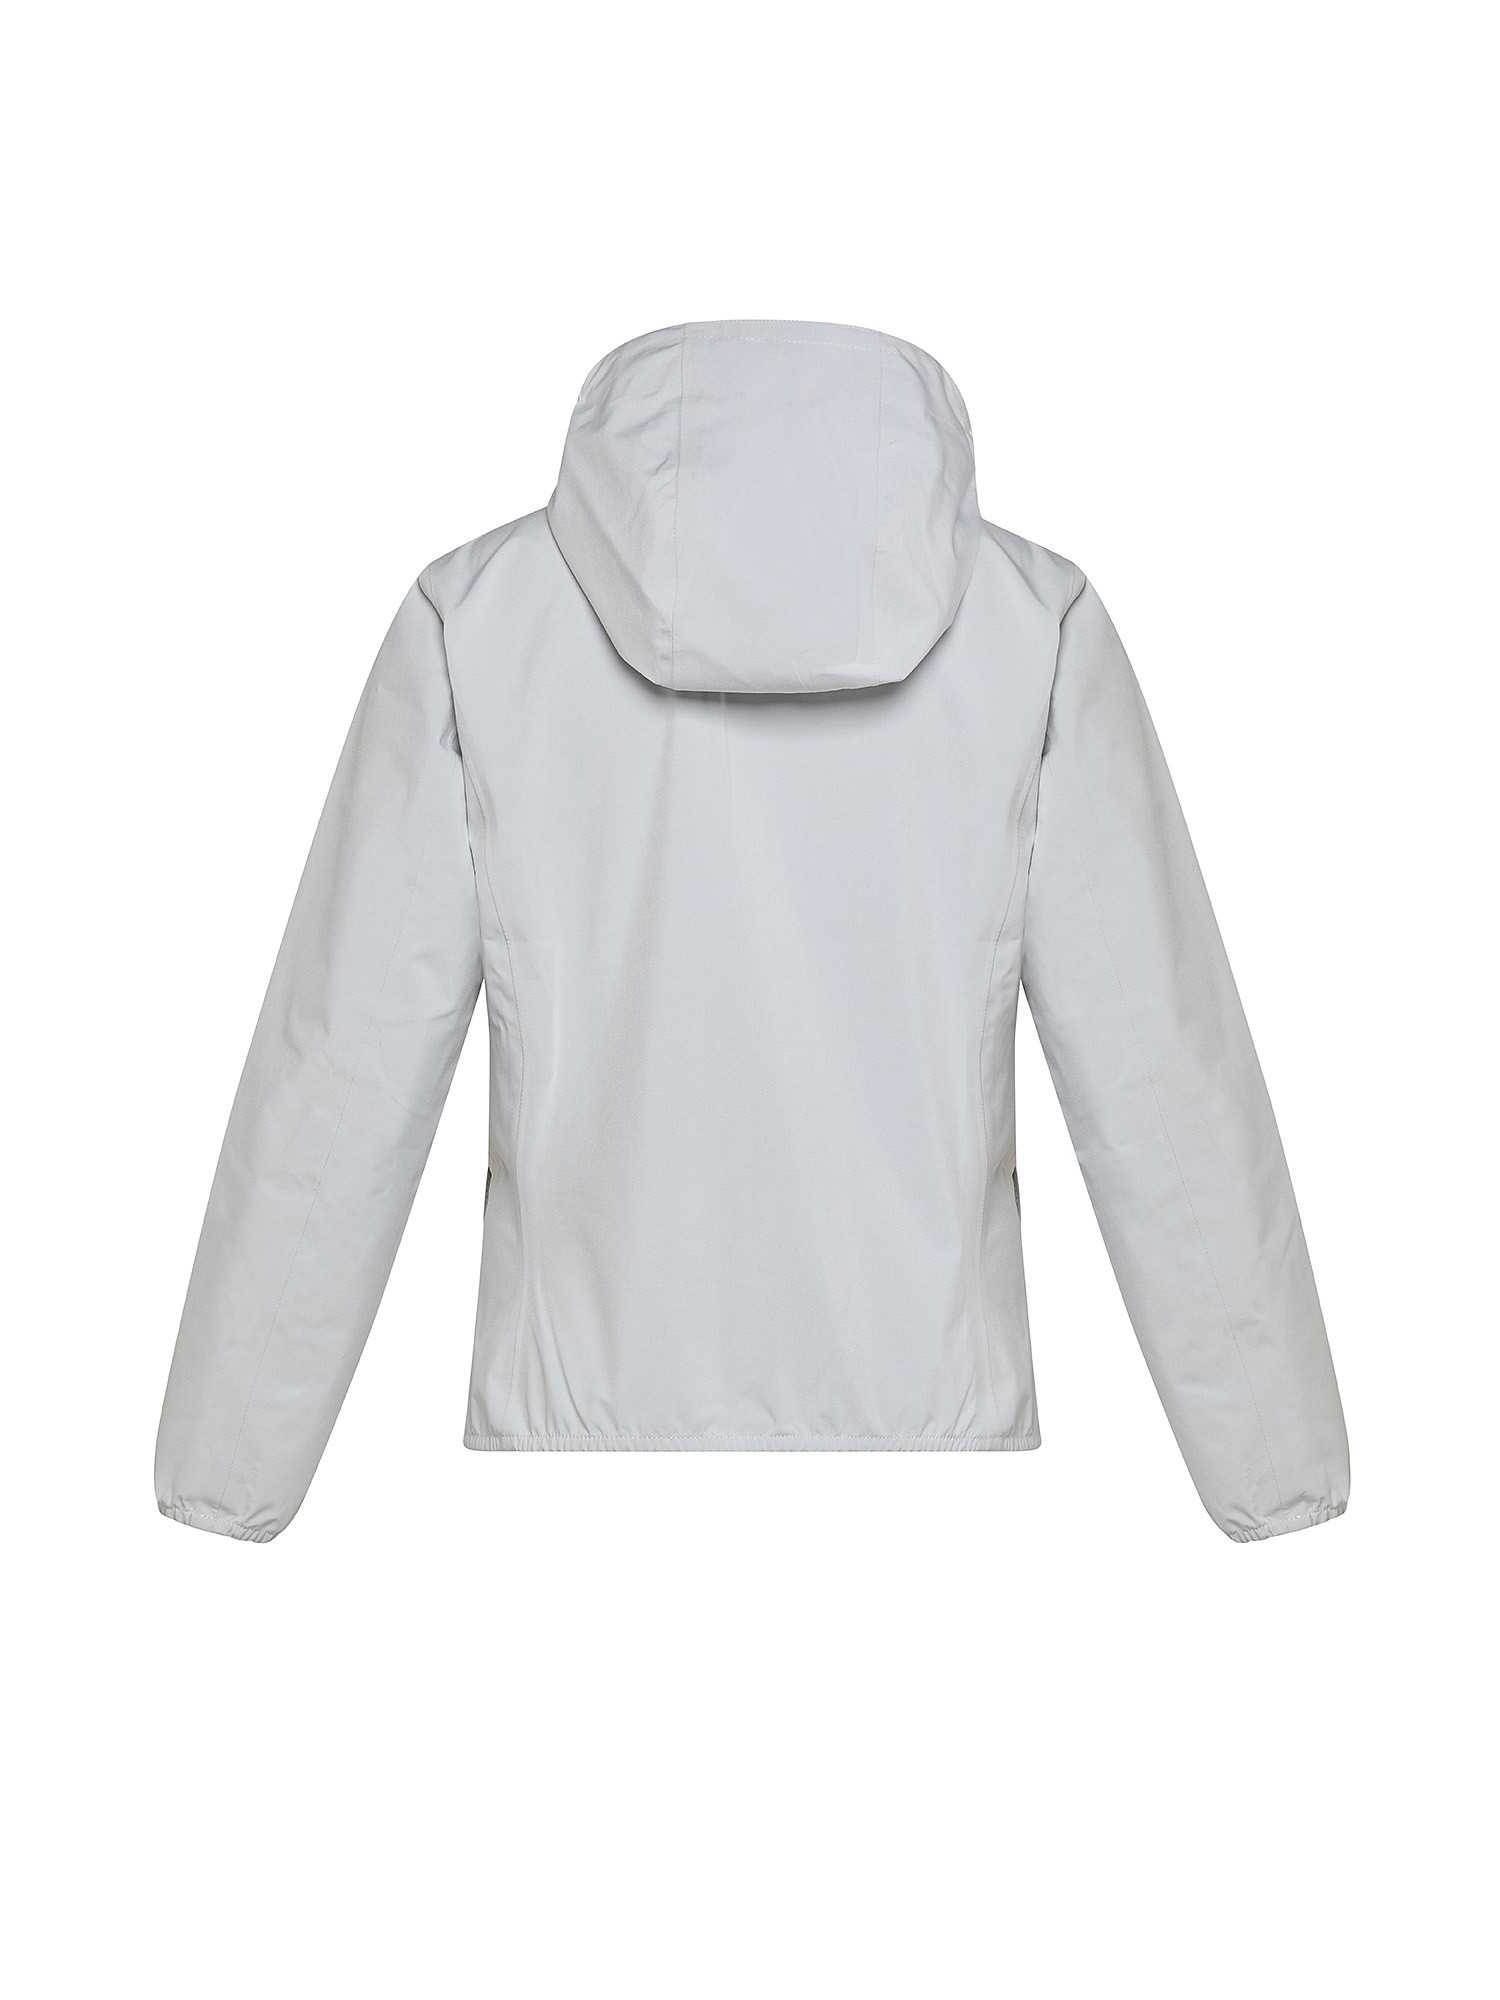 Waterproof boy jacket, White, large image number 1